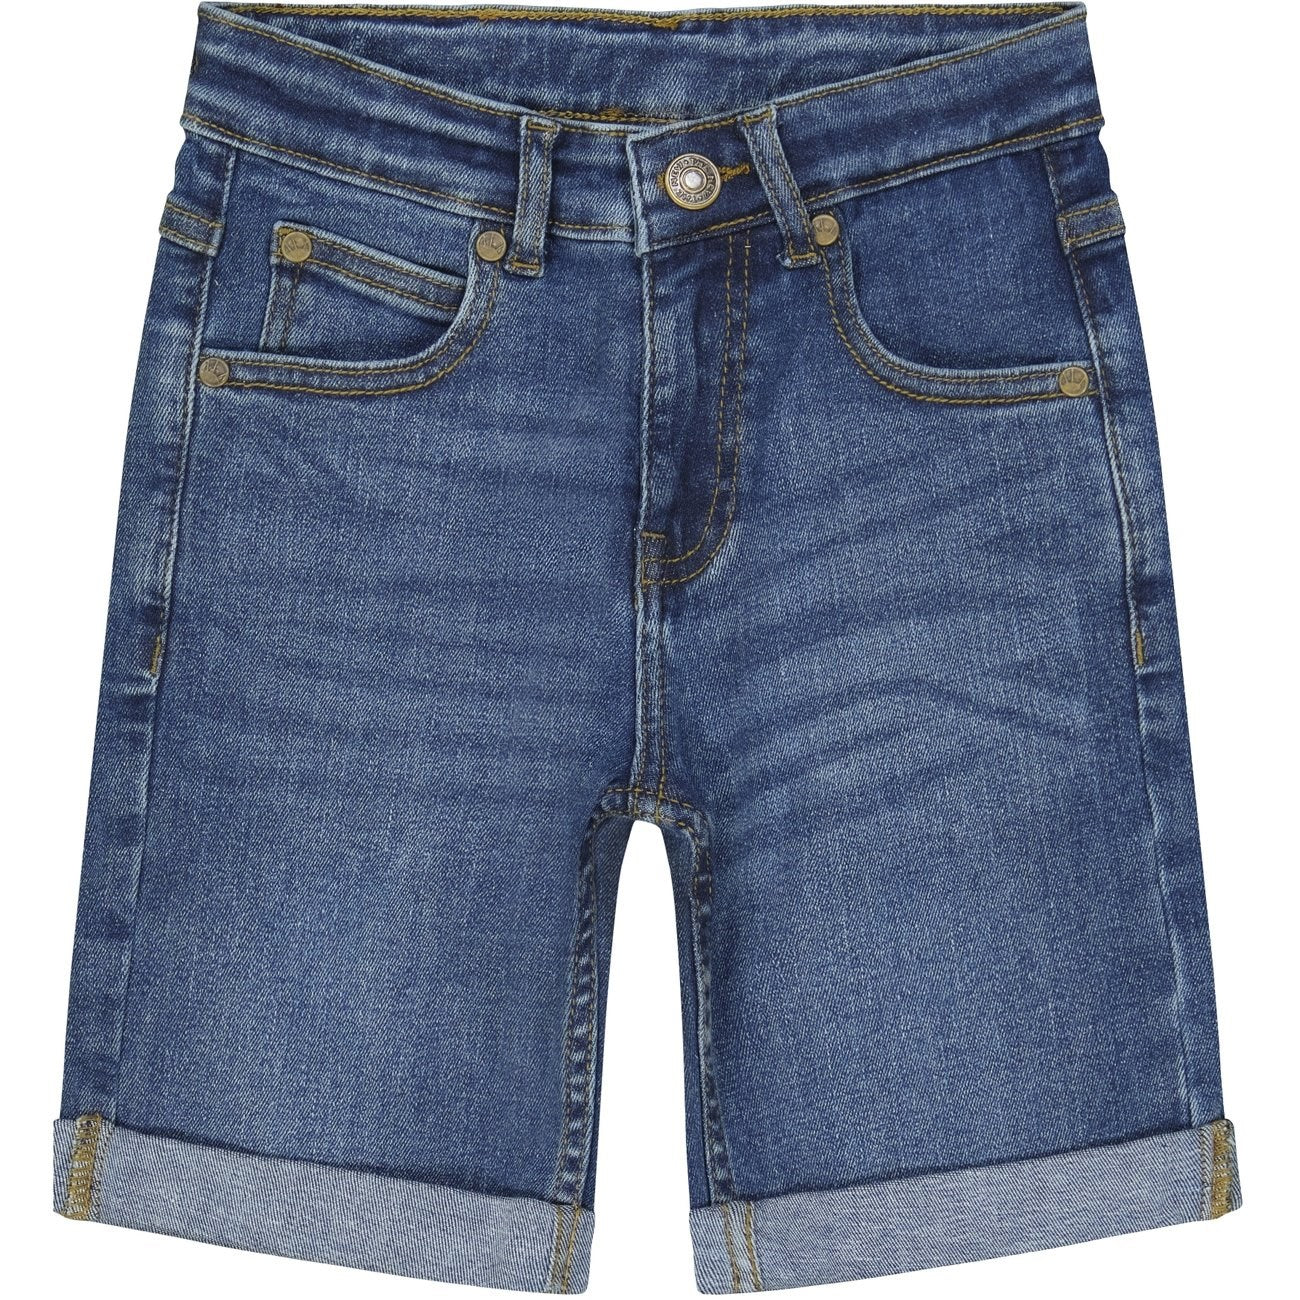 The New Medium blue Denim Shorts